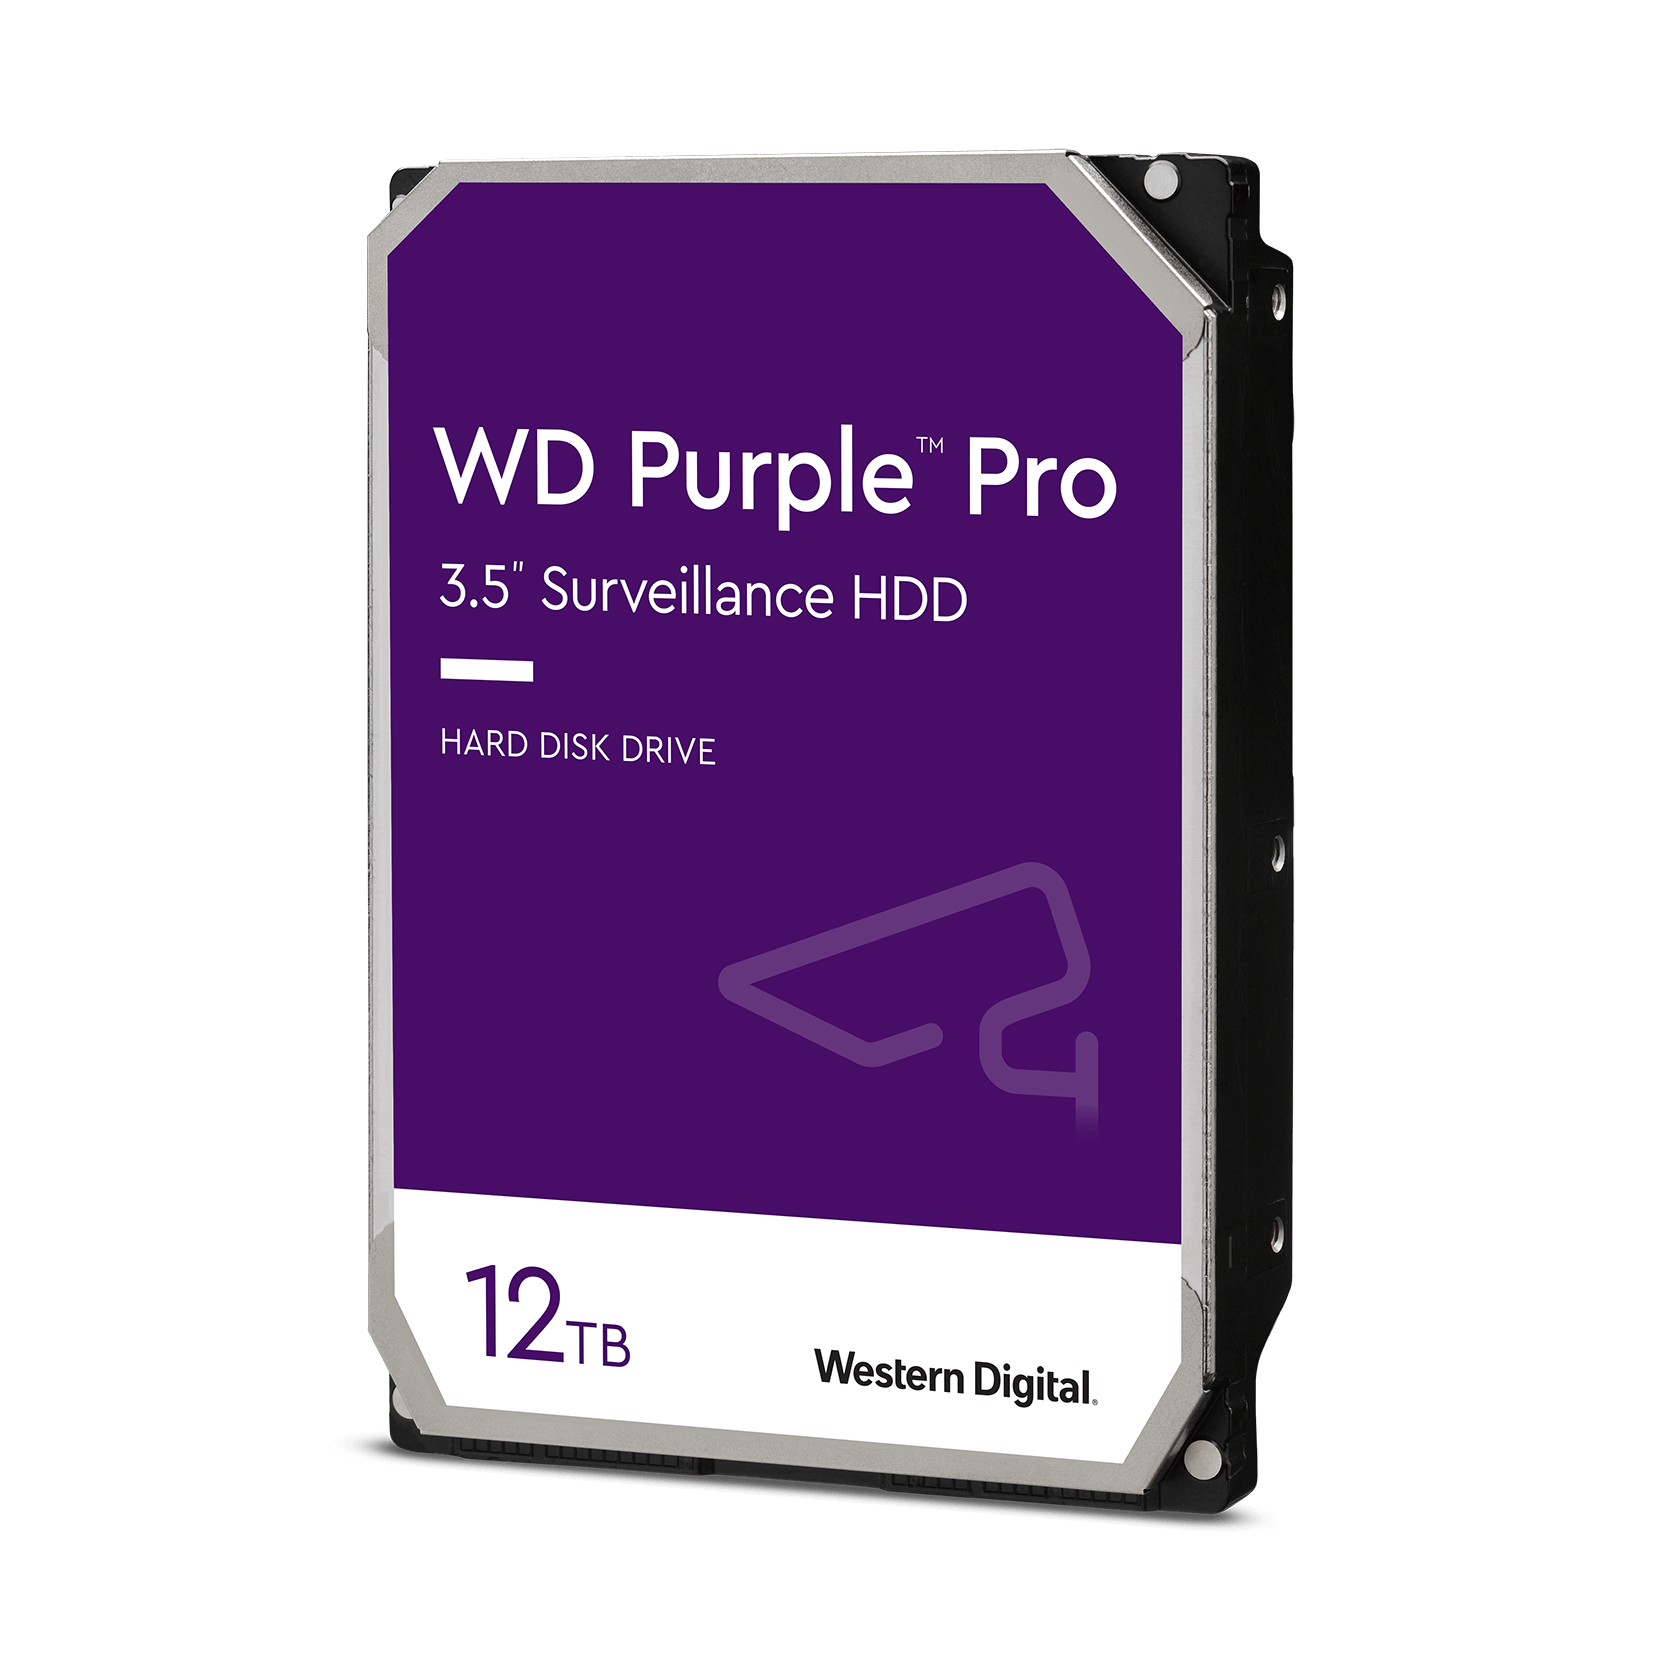 Western Digital 12TB WD Pro - Surveillance, Purple - WD121PURP, Hard Drive